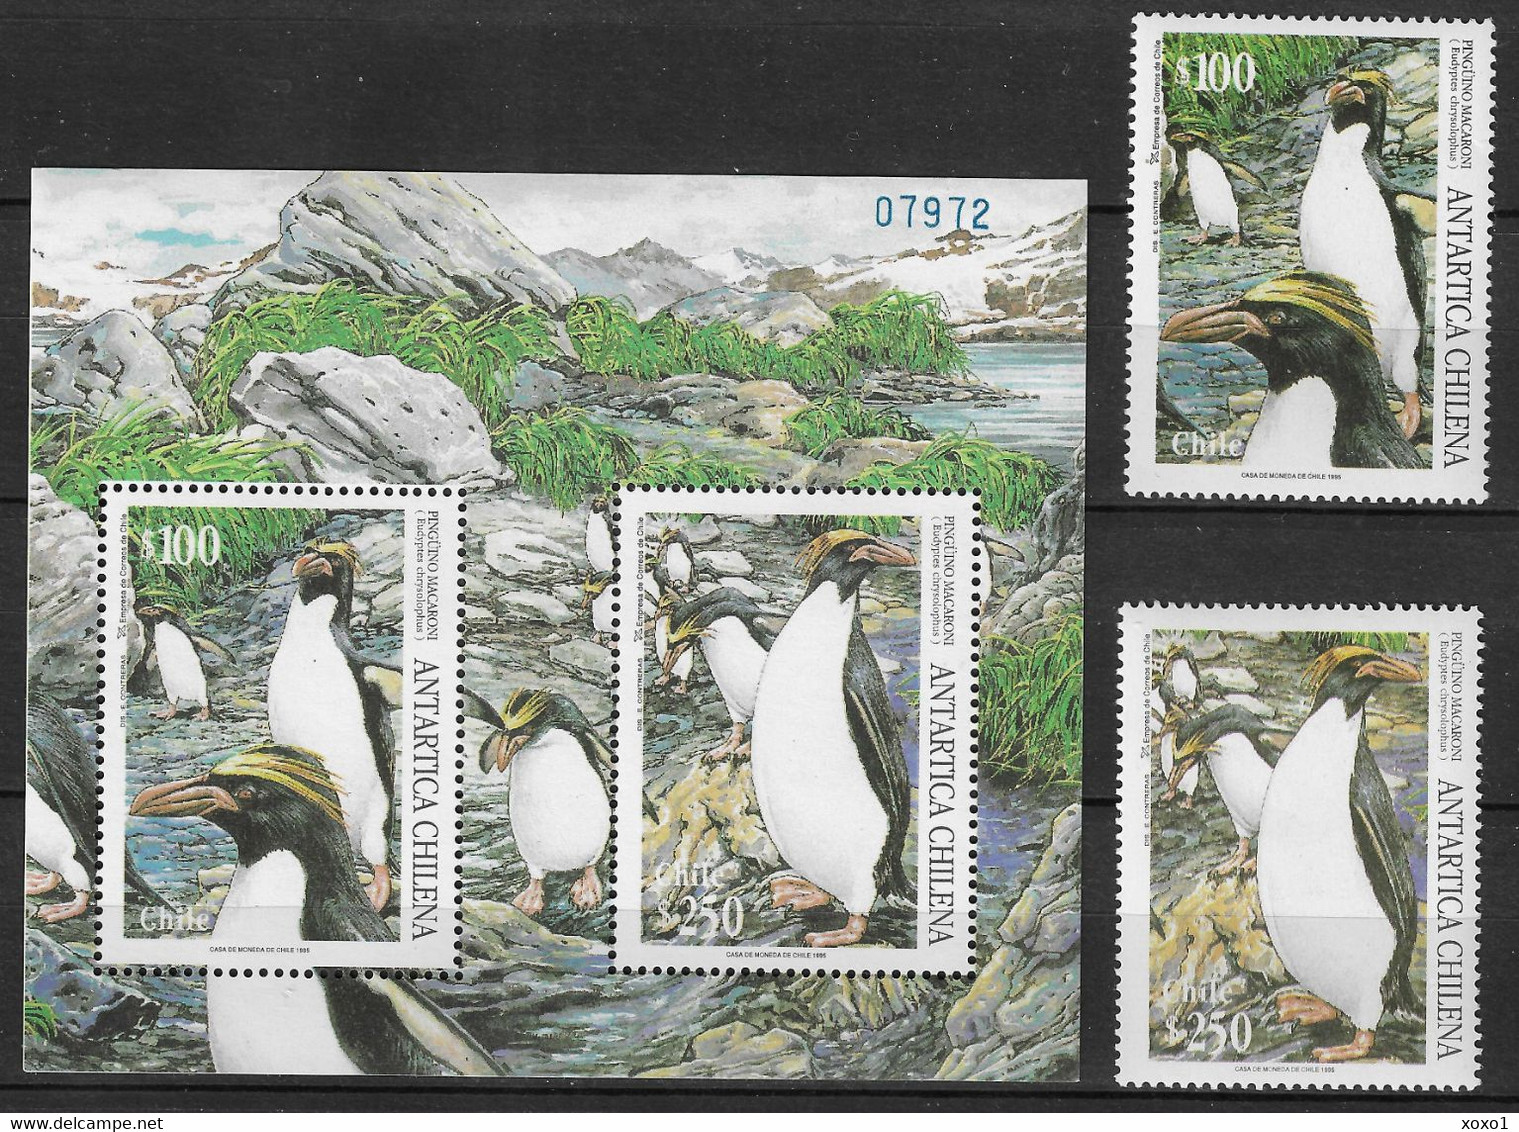 Chile 1995 MiNr. 1684 - 1685 (Block 32) South Pole  Antarctic Wildlife Birds Macaroni Penguin 2v +1s/sh MNH** 9.50 € - Antarctic Wildlife